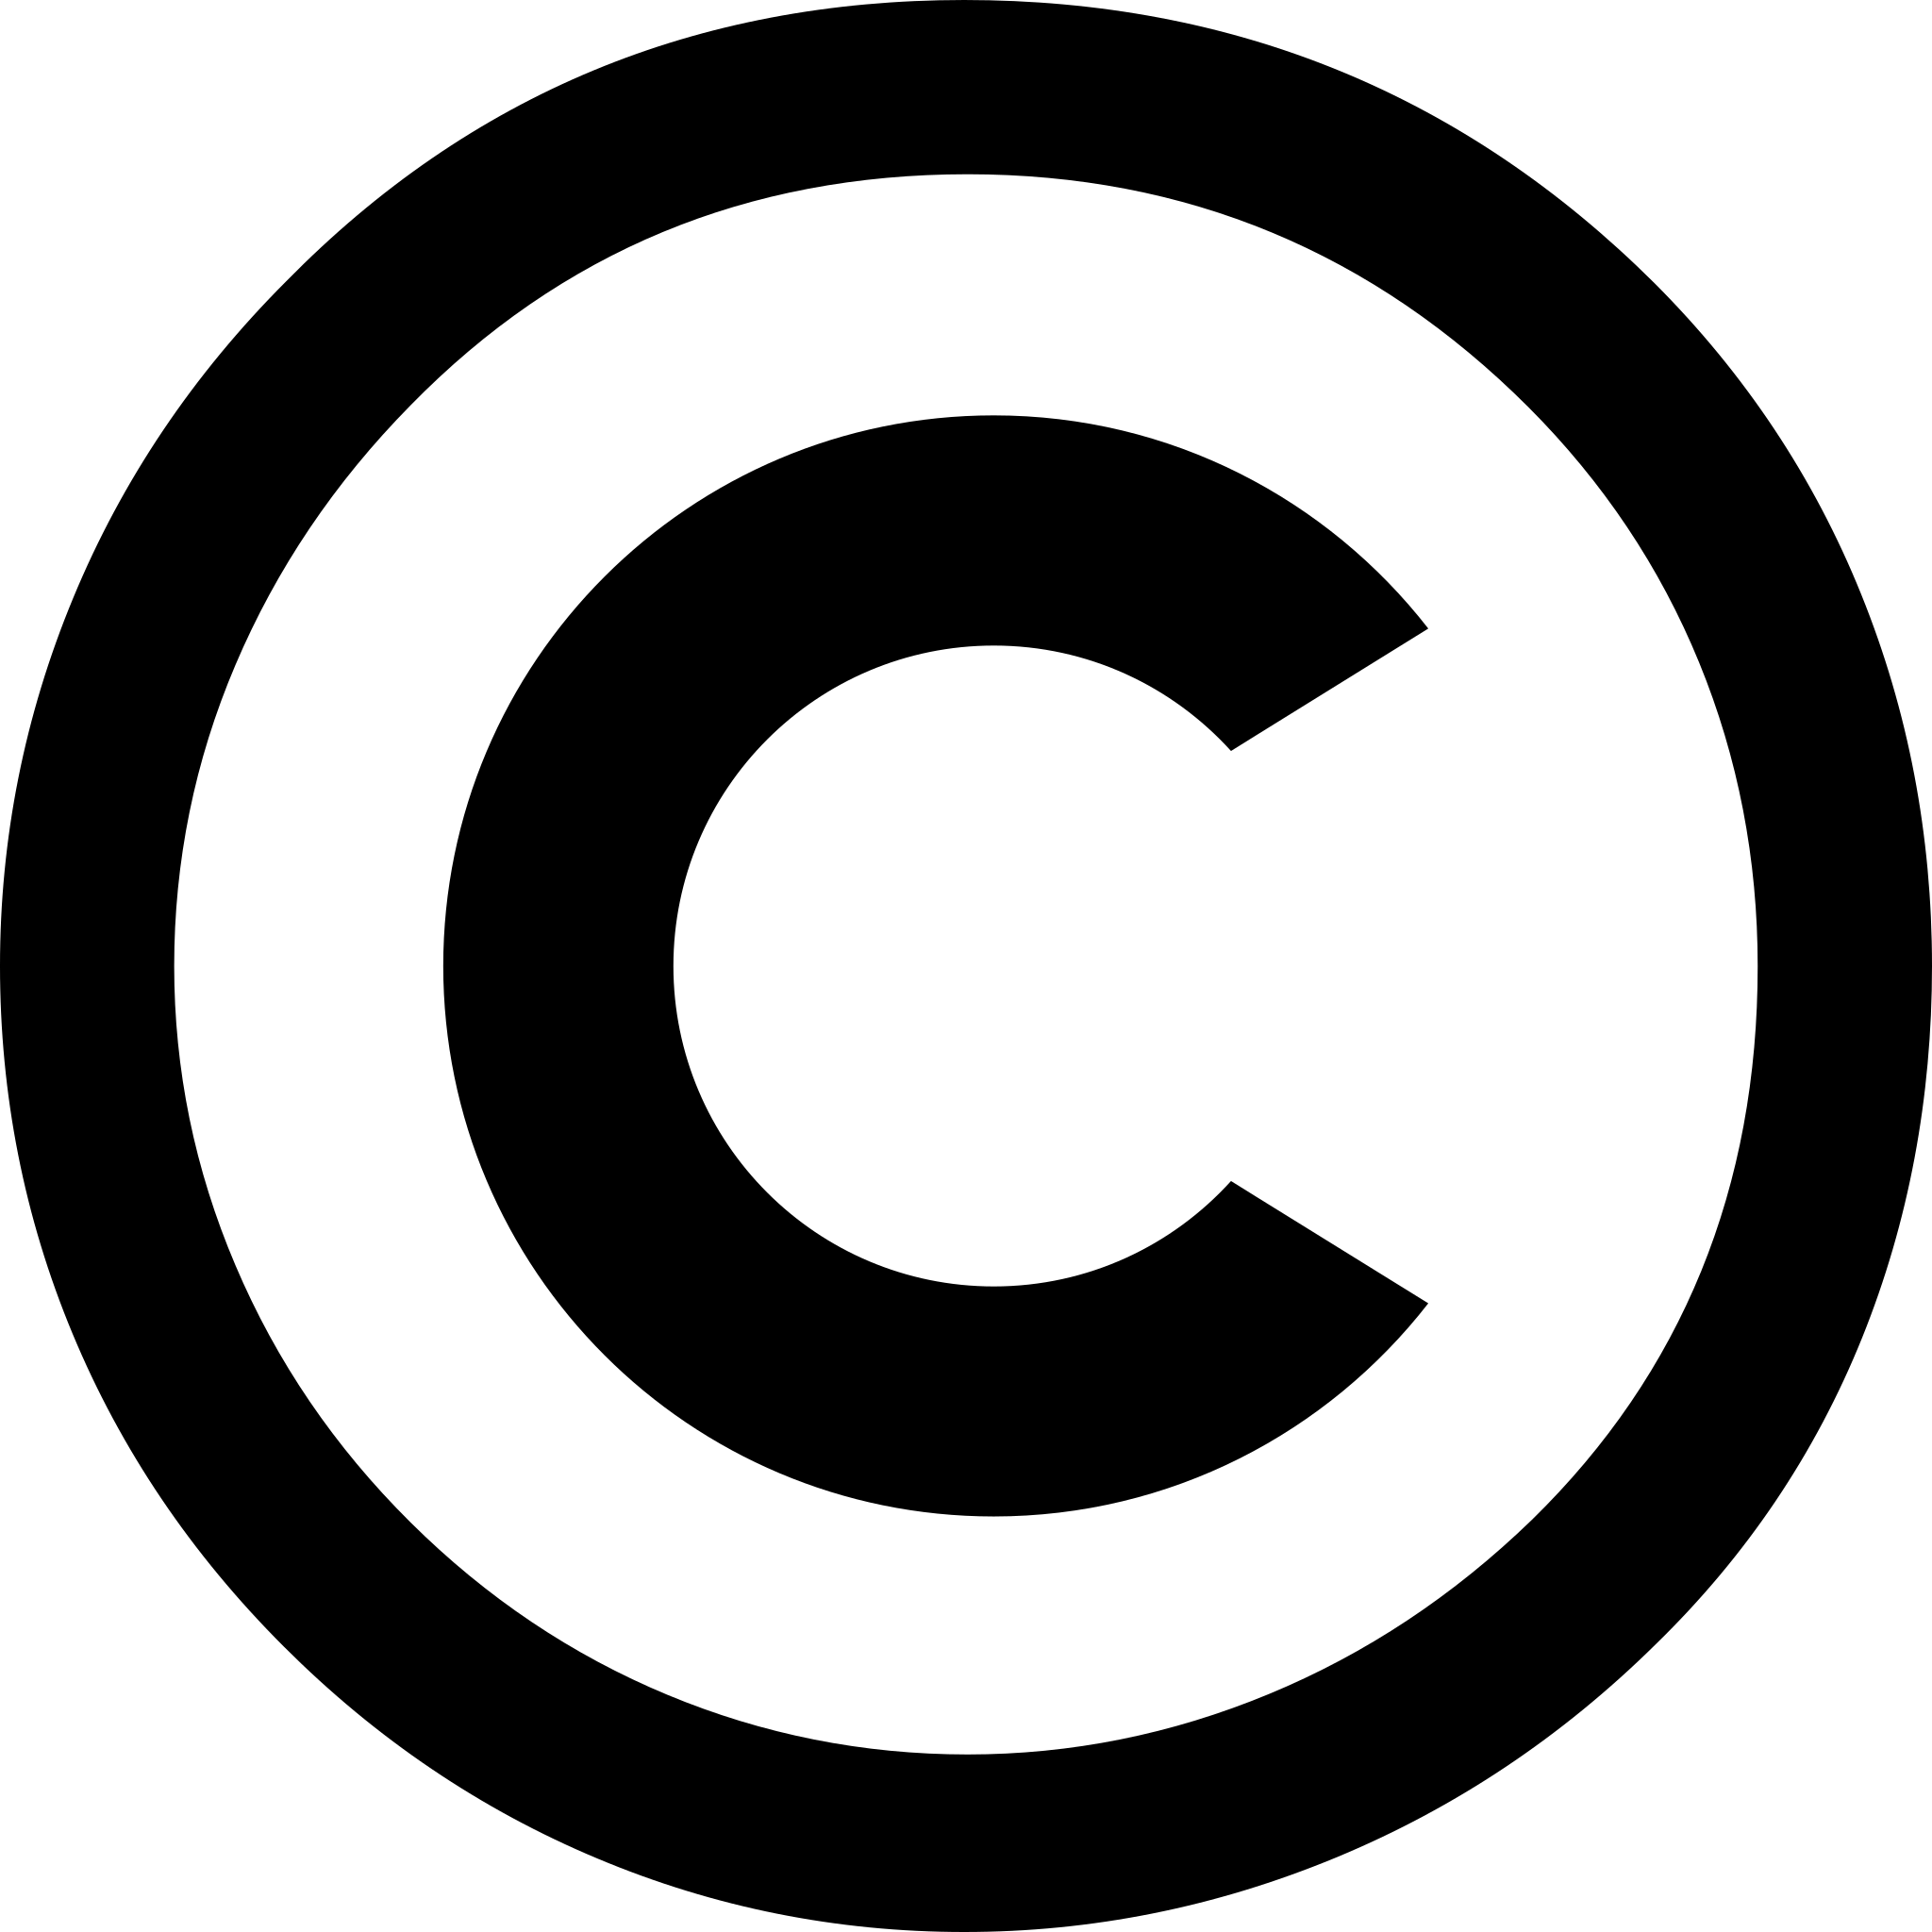 File:Halo (series) logo.svg - Wikipedia